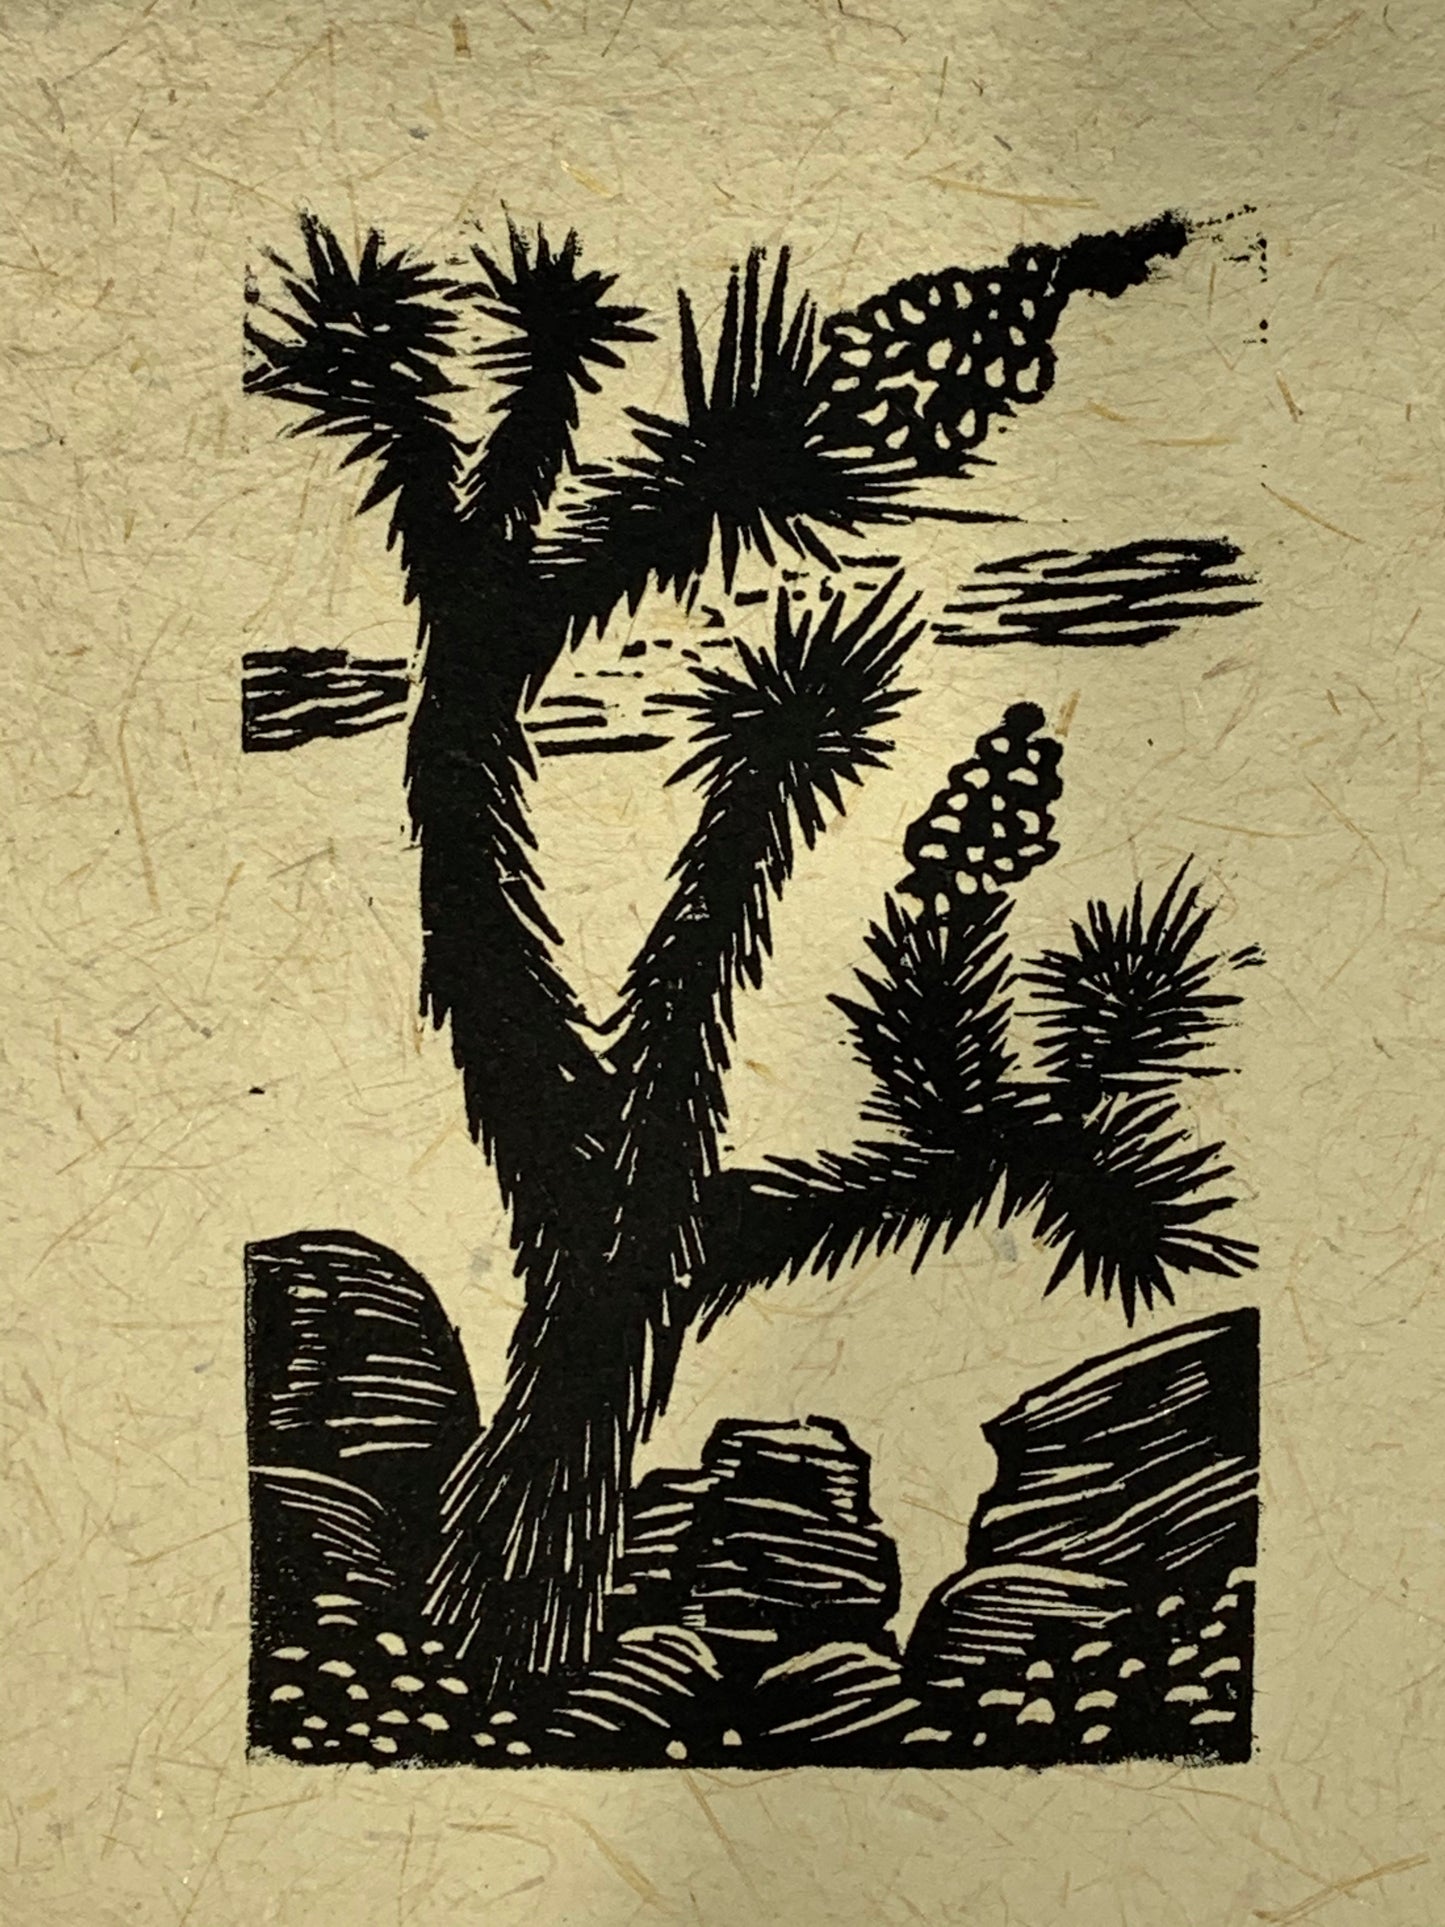 SET 9 Original Woodcut Prints Desert Landscapes Joshua Yucca